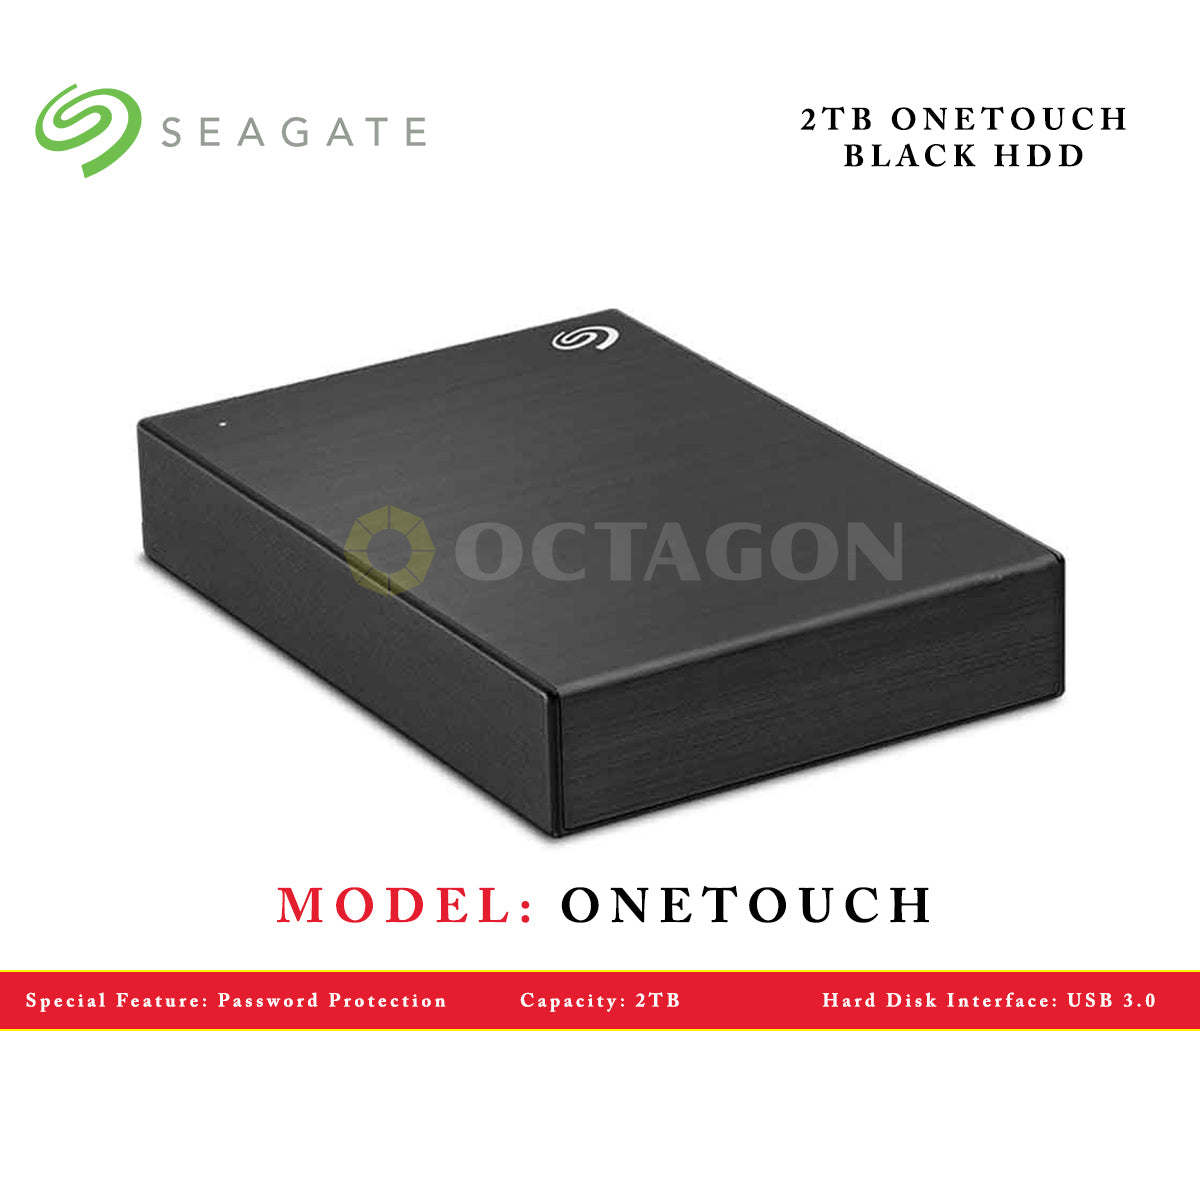 SEAGATE 2TB ONETOUCH BLACK HDD W/ PW